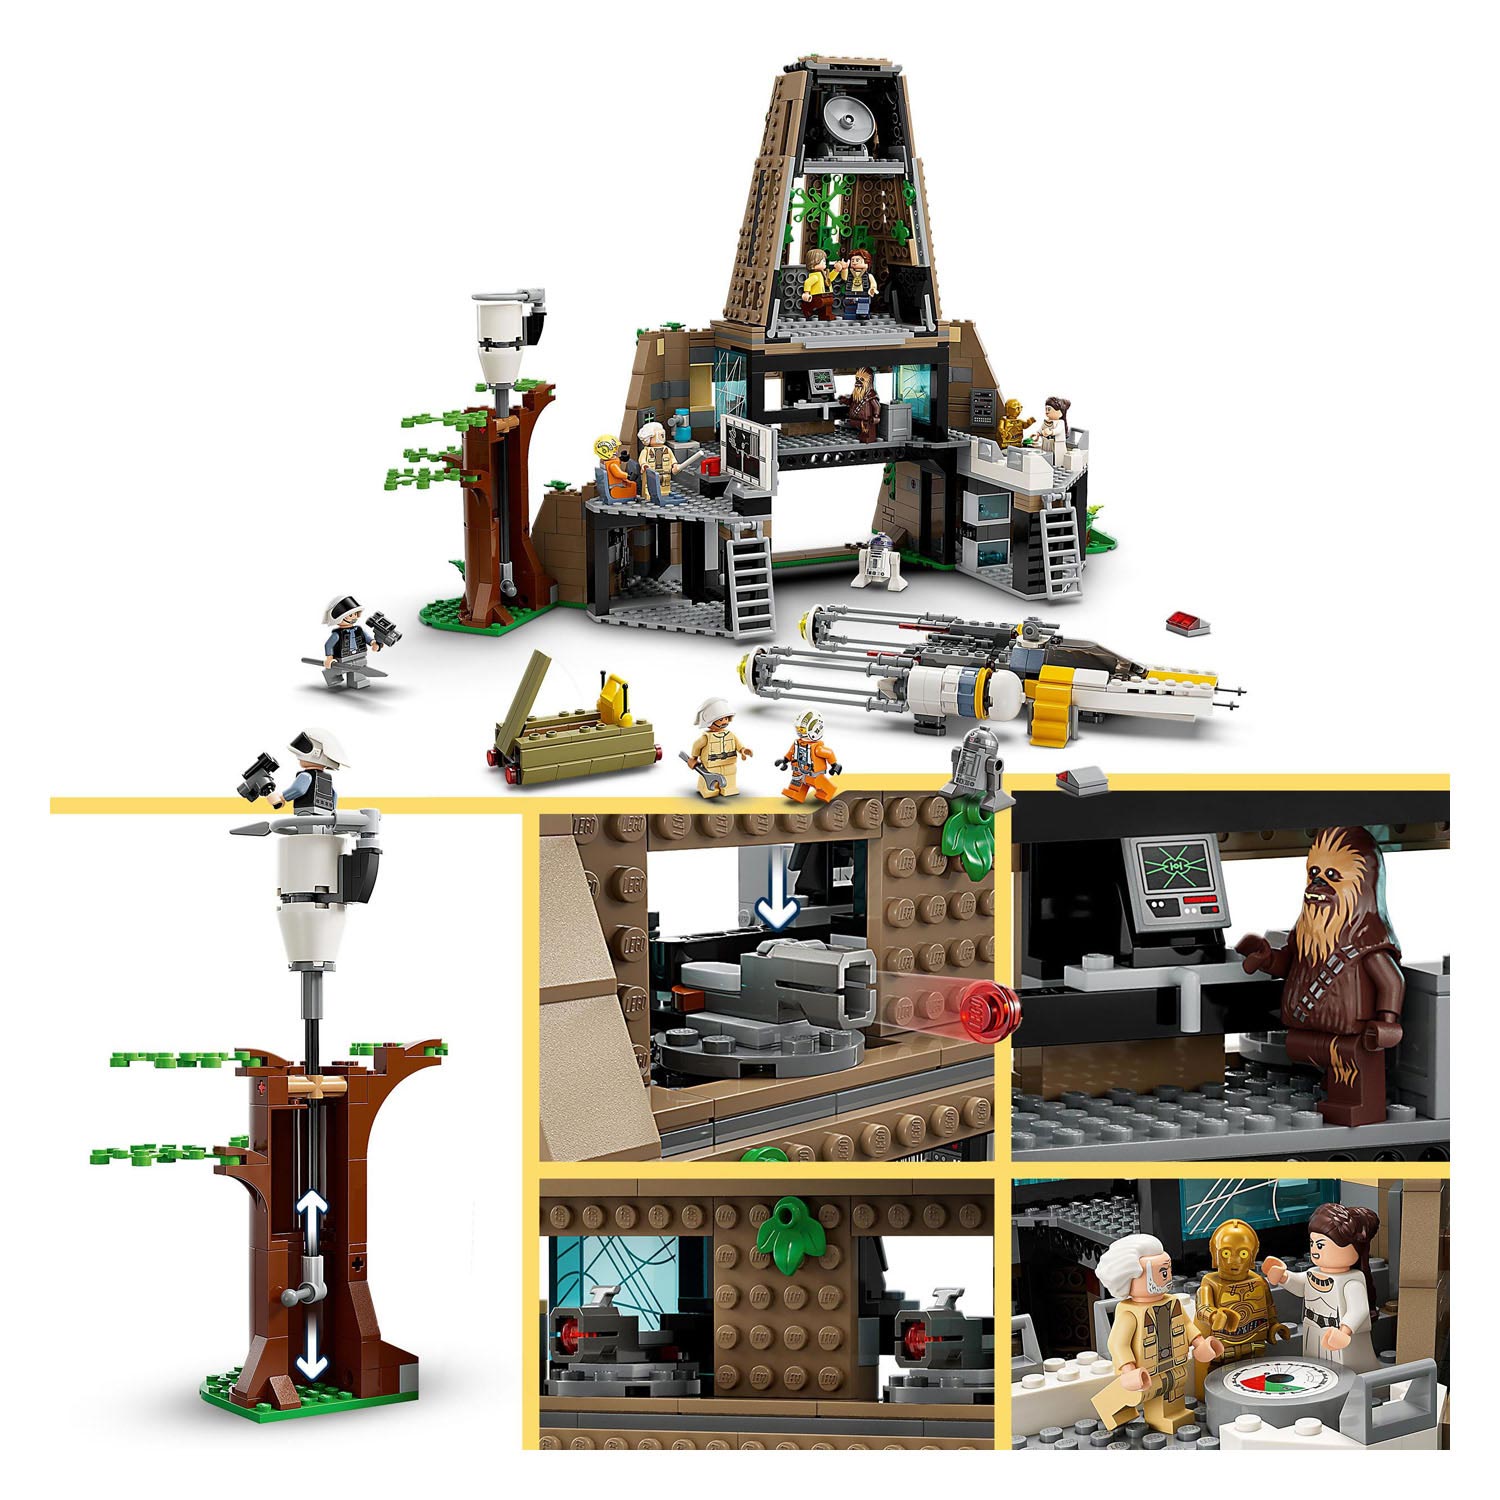 LEGO Star Wars 5365 Base rebelle sur Yavin 4